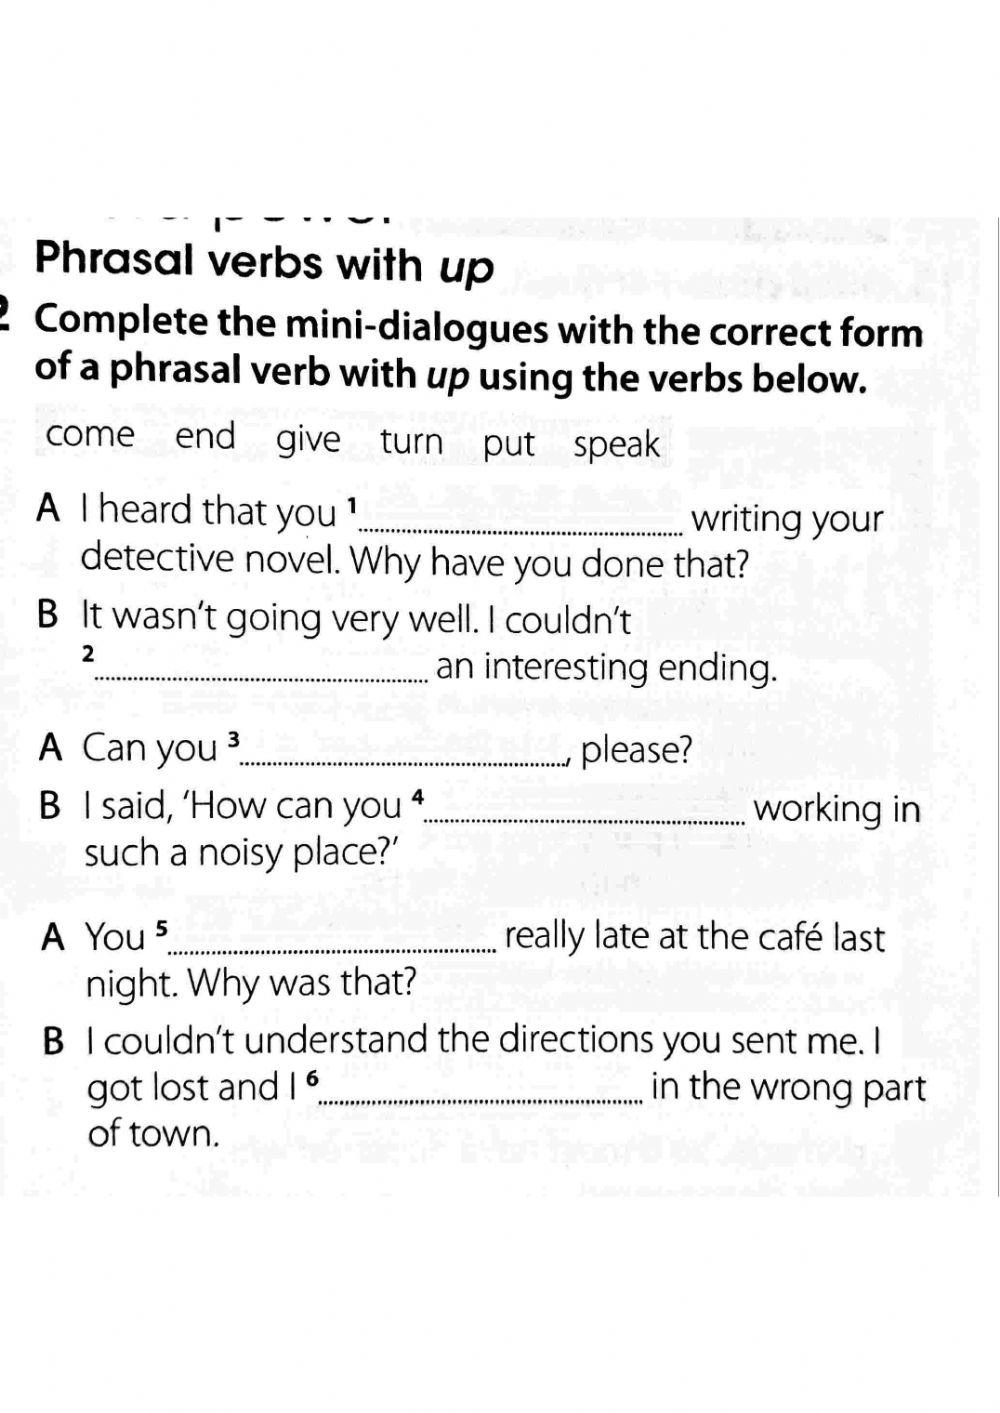 Some phrasal verbs